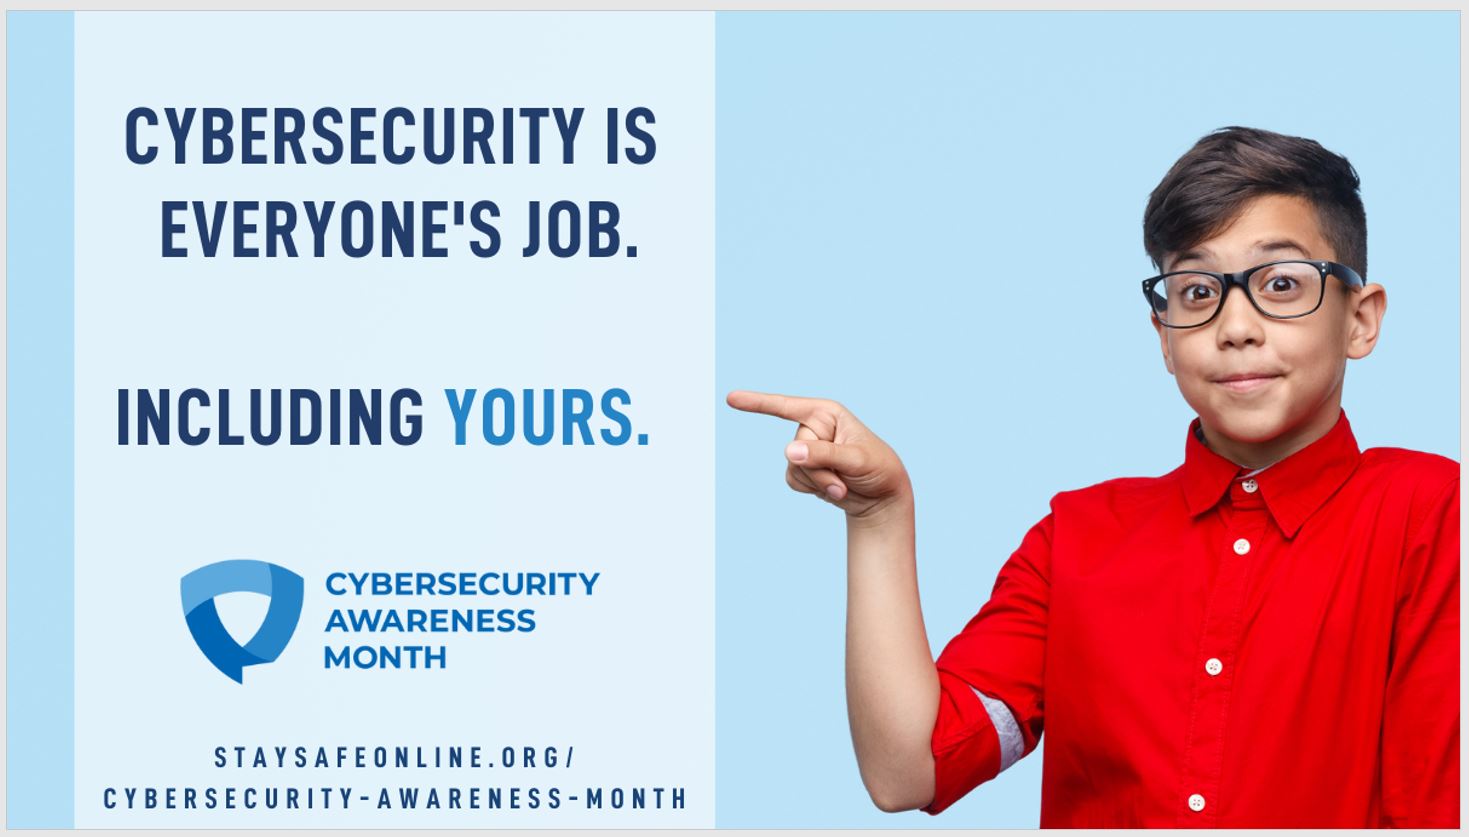 Cybersecurity is everyone's job